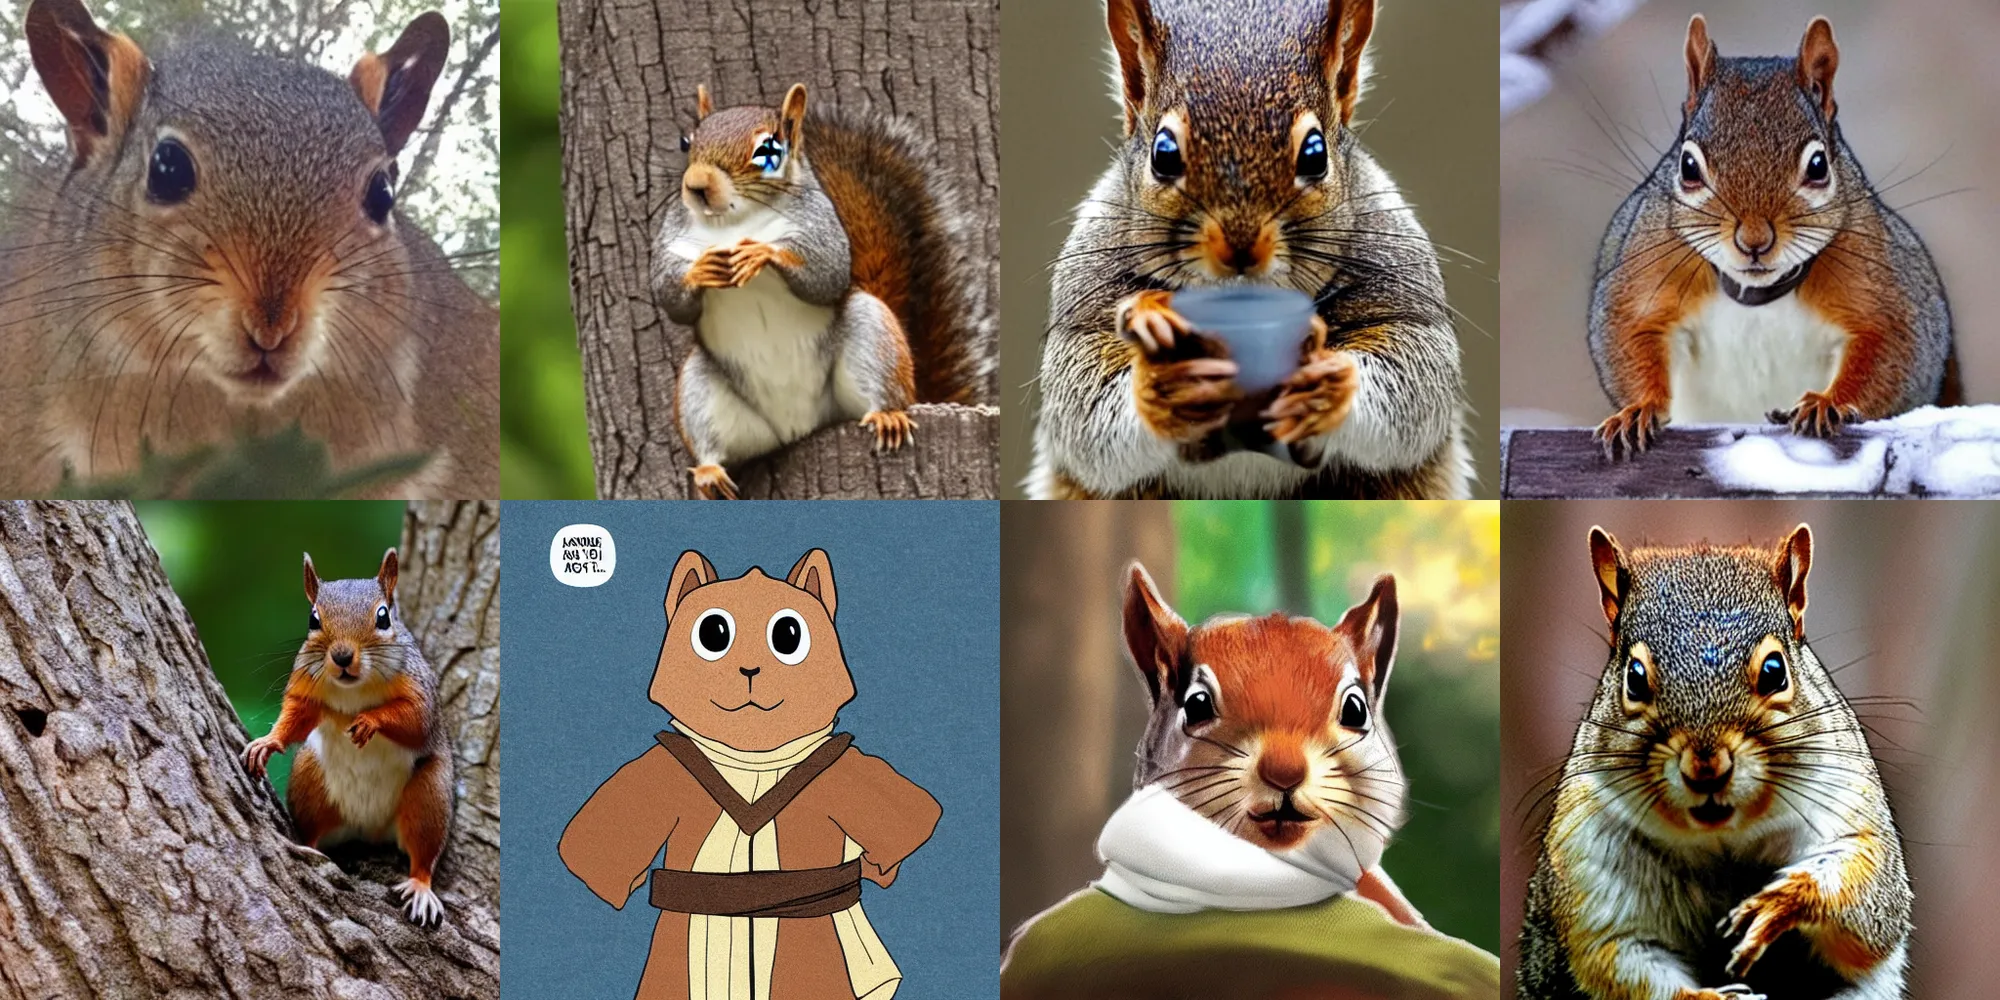 Prompt: obi - wan kenobi as a squirrel